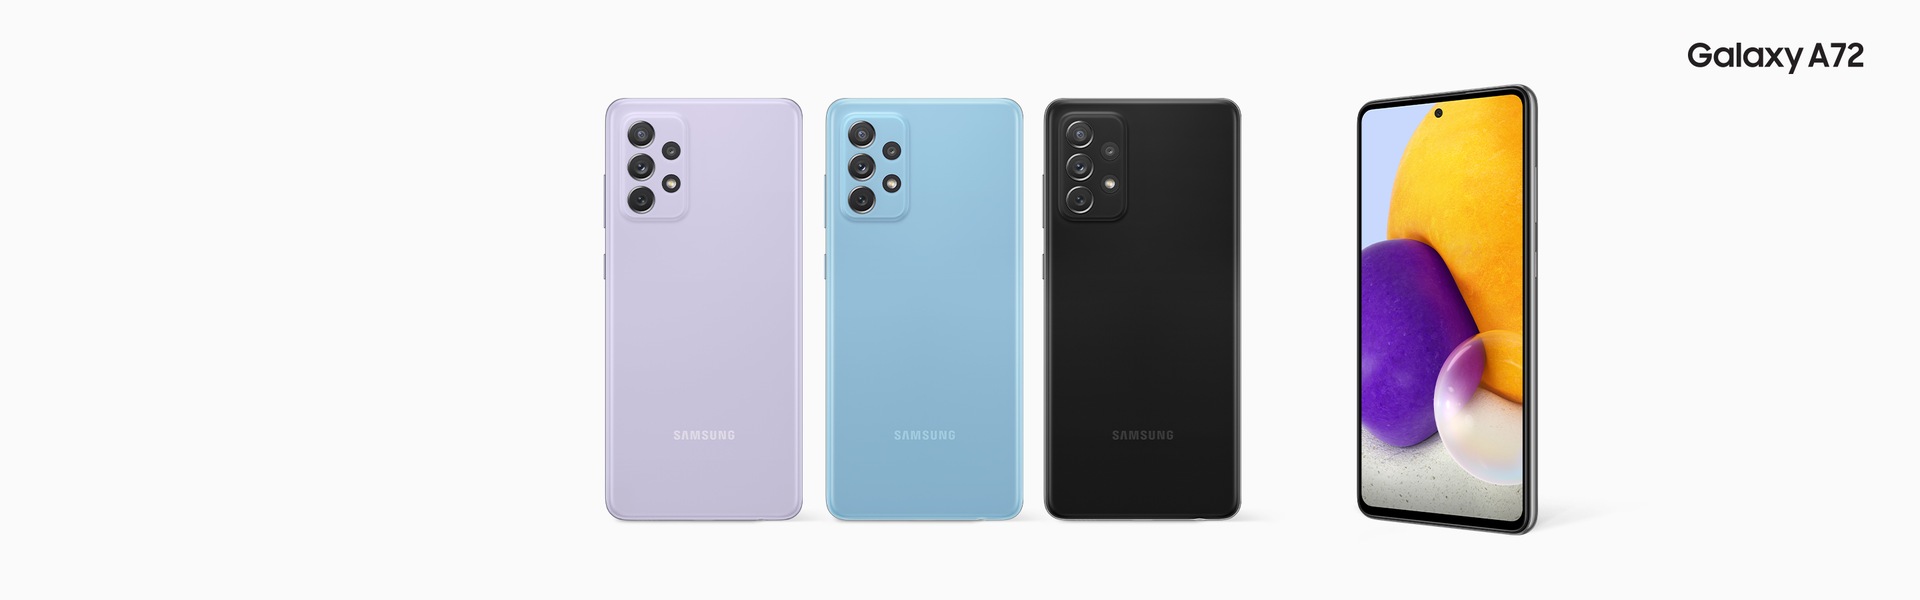 Malaysia a52 harga samsung Samsung Galaxy